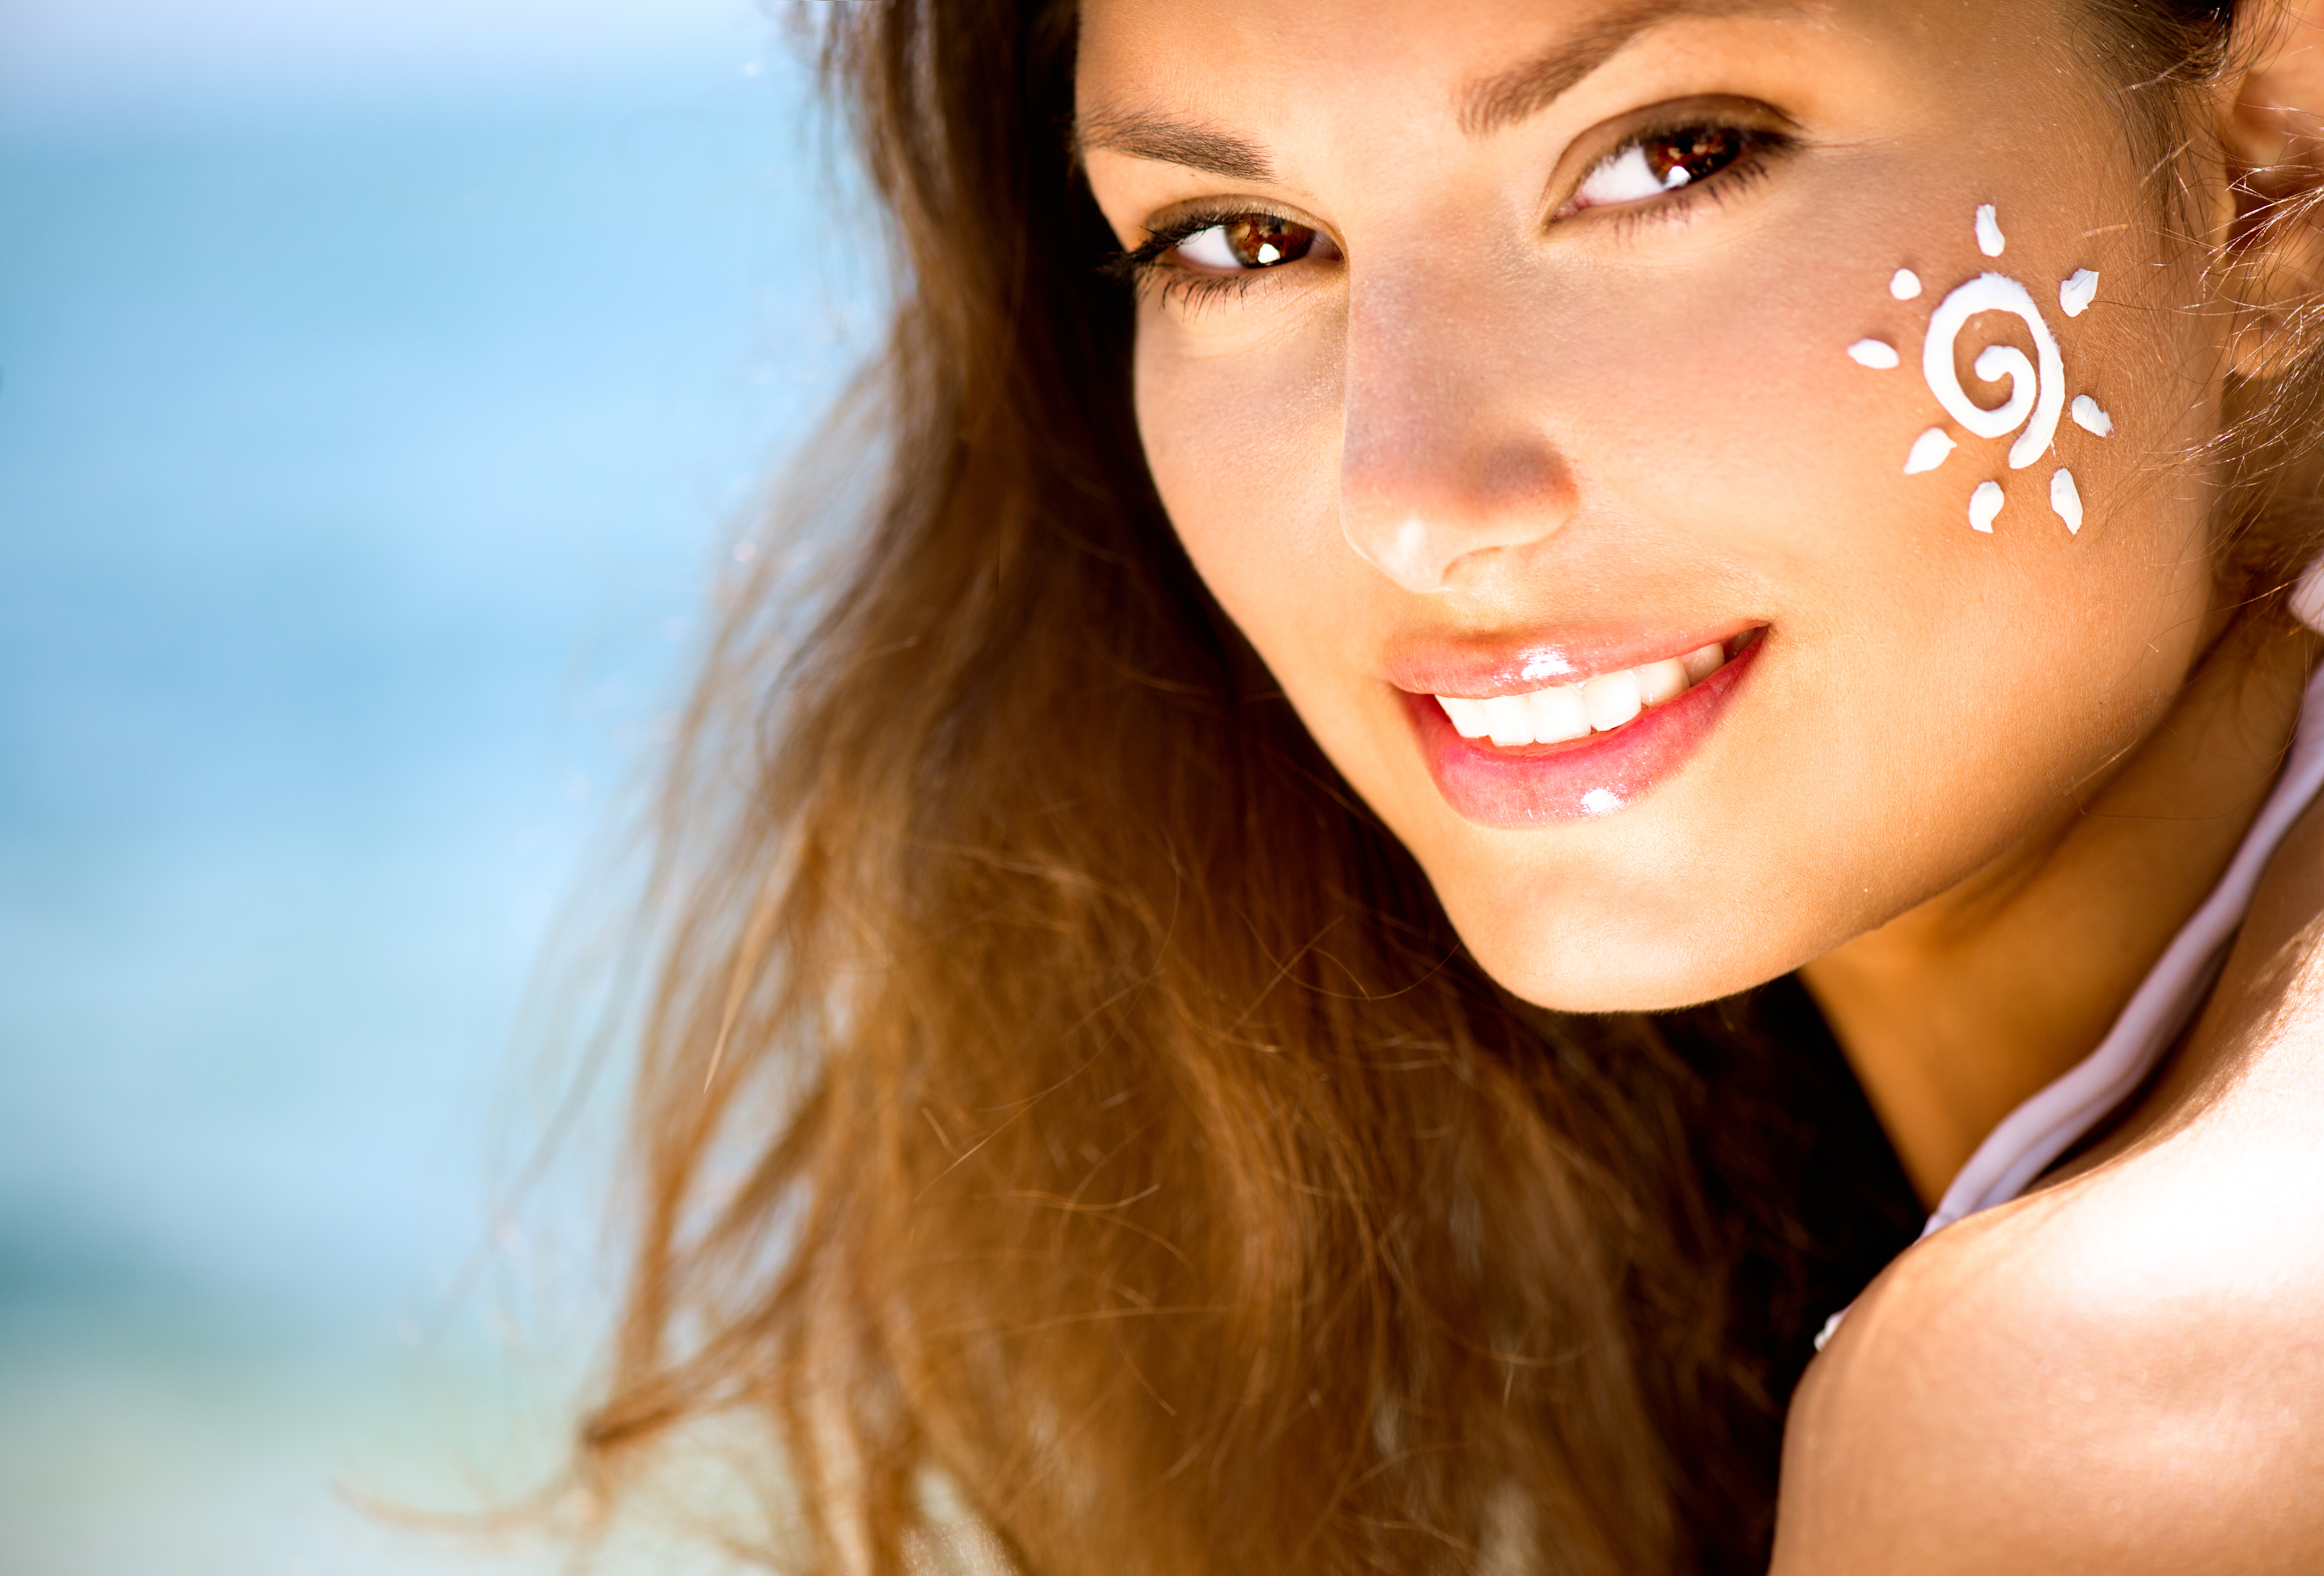 Beauty Girl Applying Sun Tan Cream on her Face. Sun Tanning